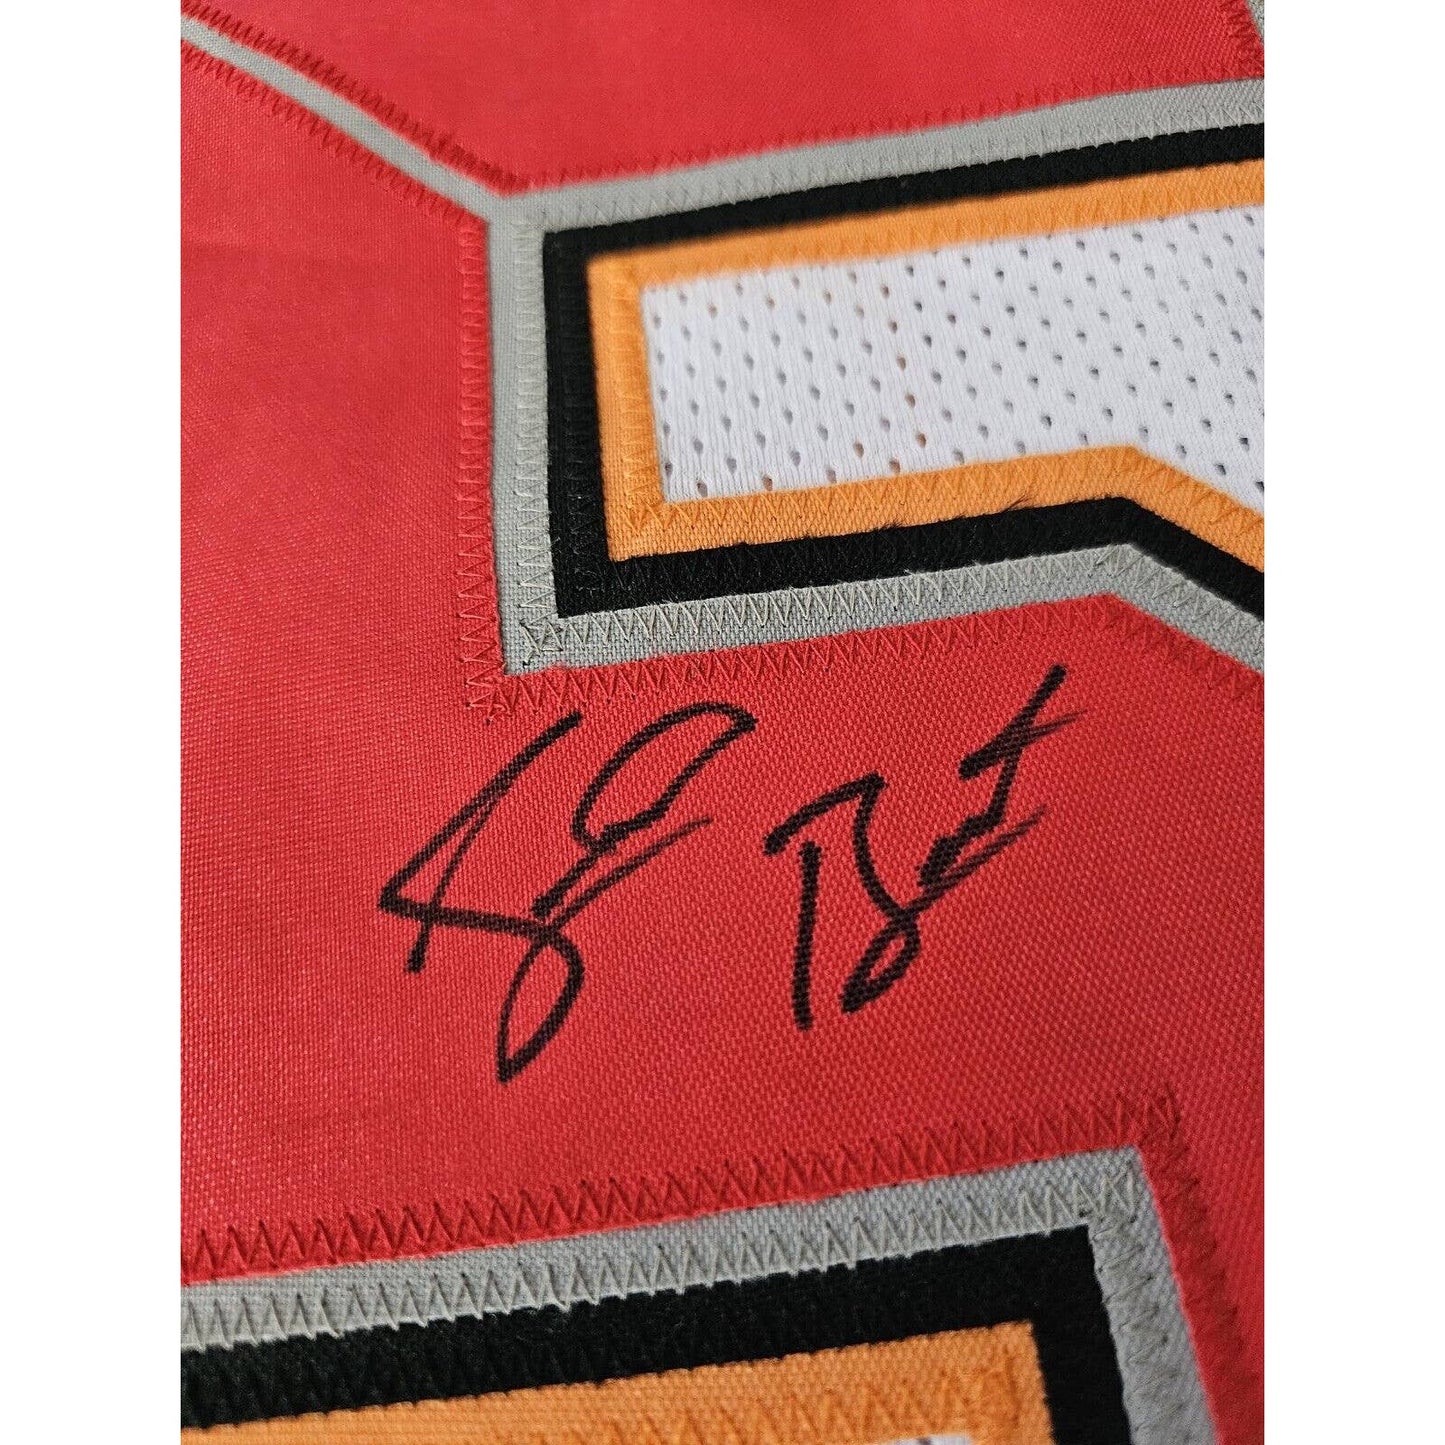 Shaquille Shaq Barrett Autographed/Signed Jersey JSA COA Tampa Bay Buccaneers